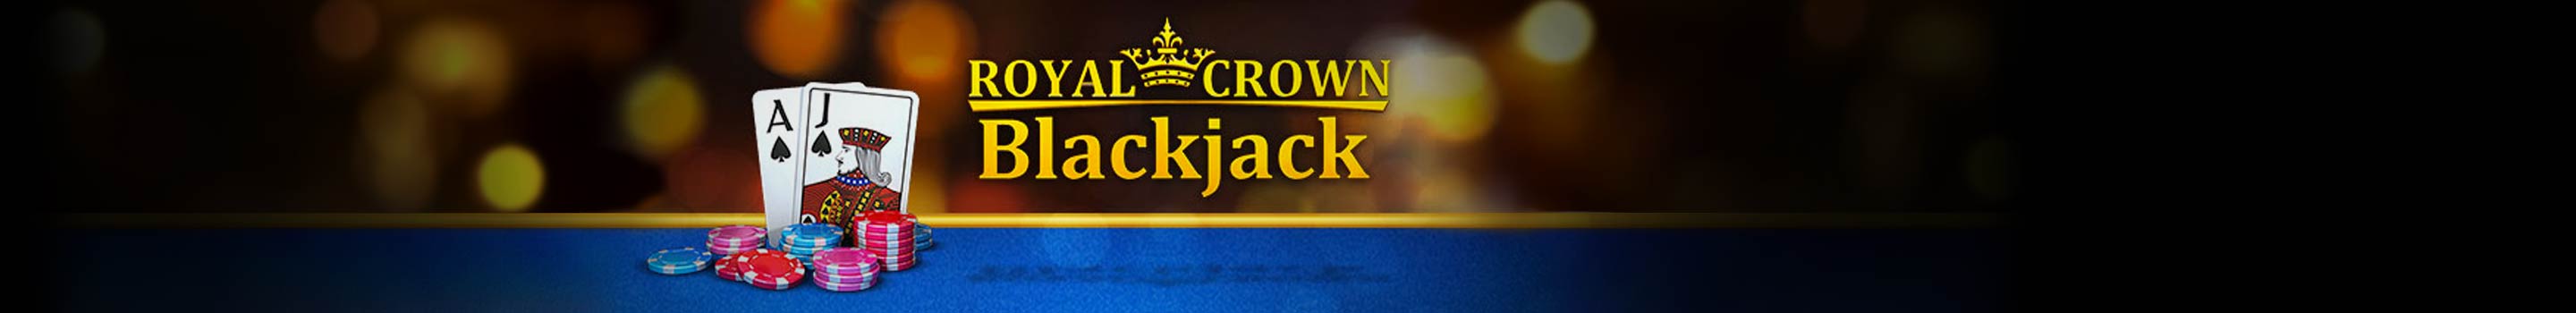 Royal Crown Blackjack